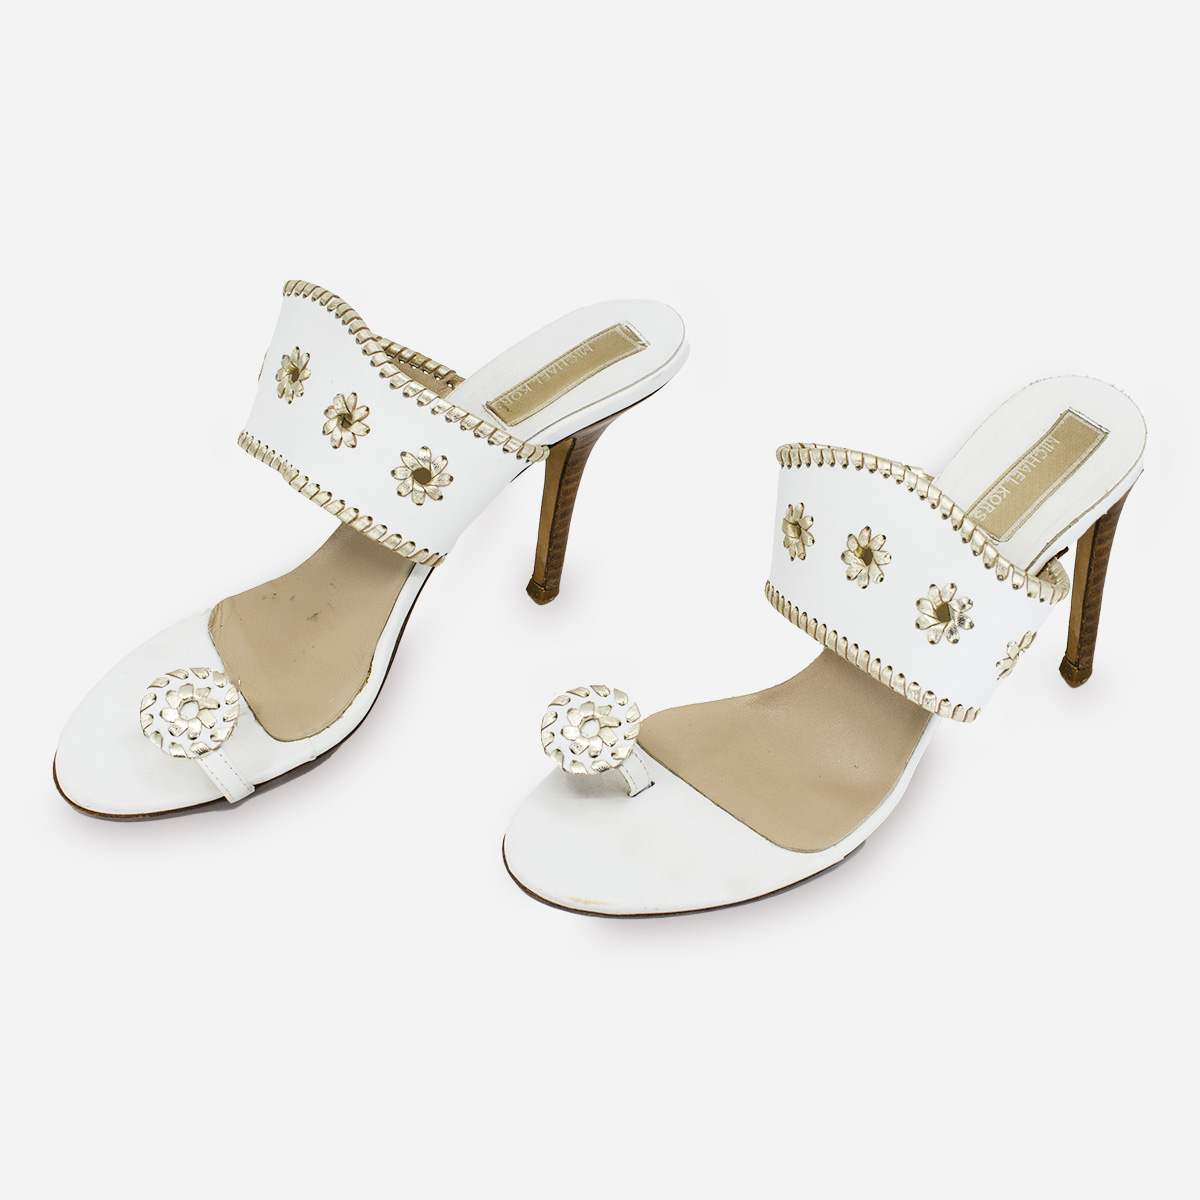 Michael Kors white sandals